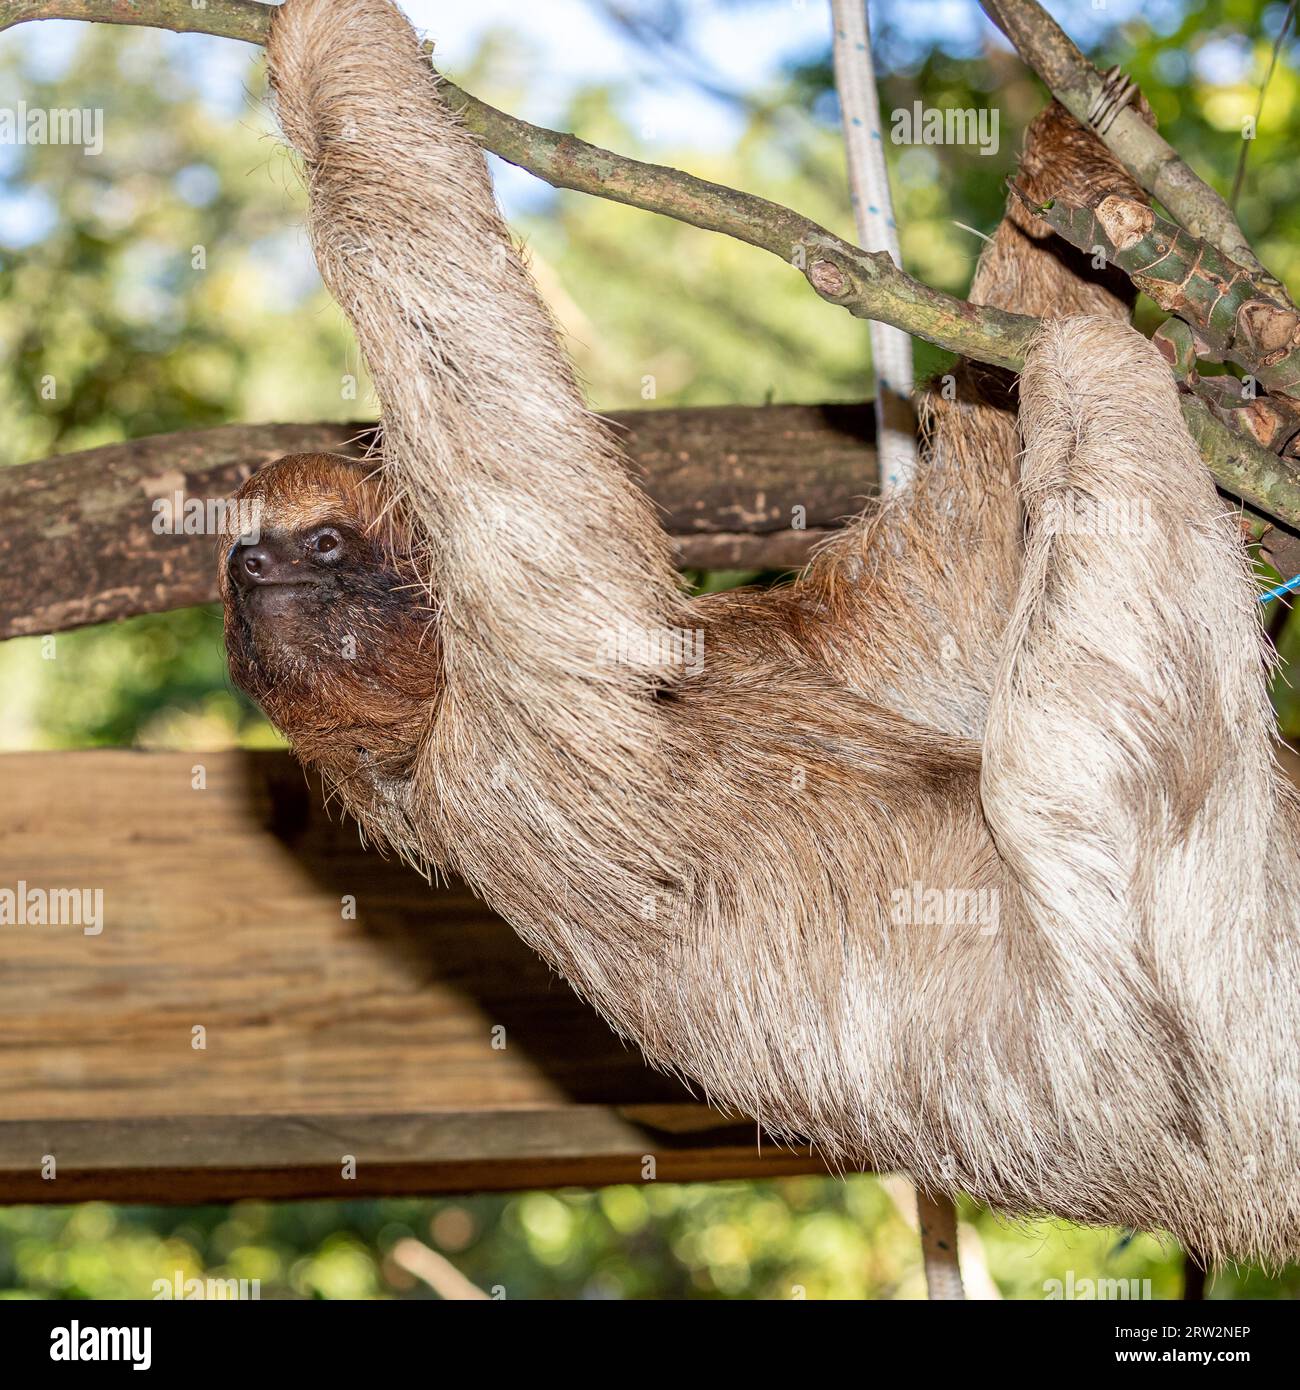 Hoffmanns zwei-Zehen-Sloth (Choloepus hoffmanni) – Bradypus didactylus, Roatán, Honduras Stockfoto